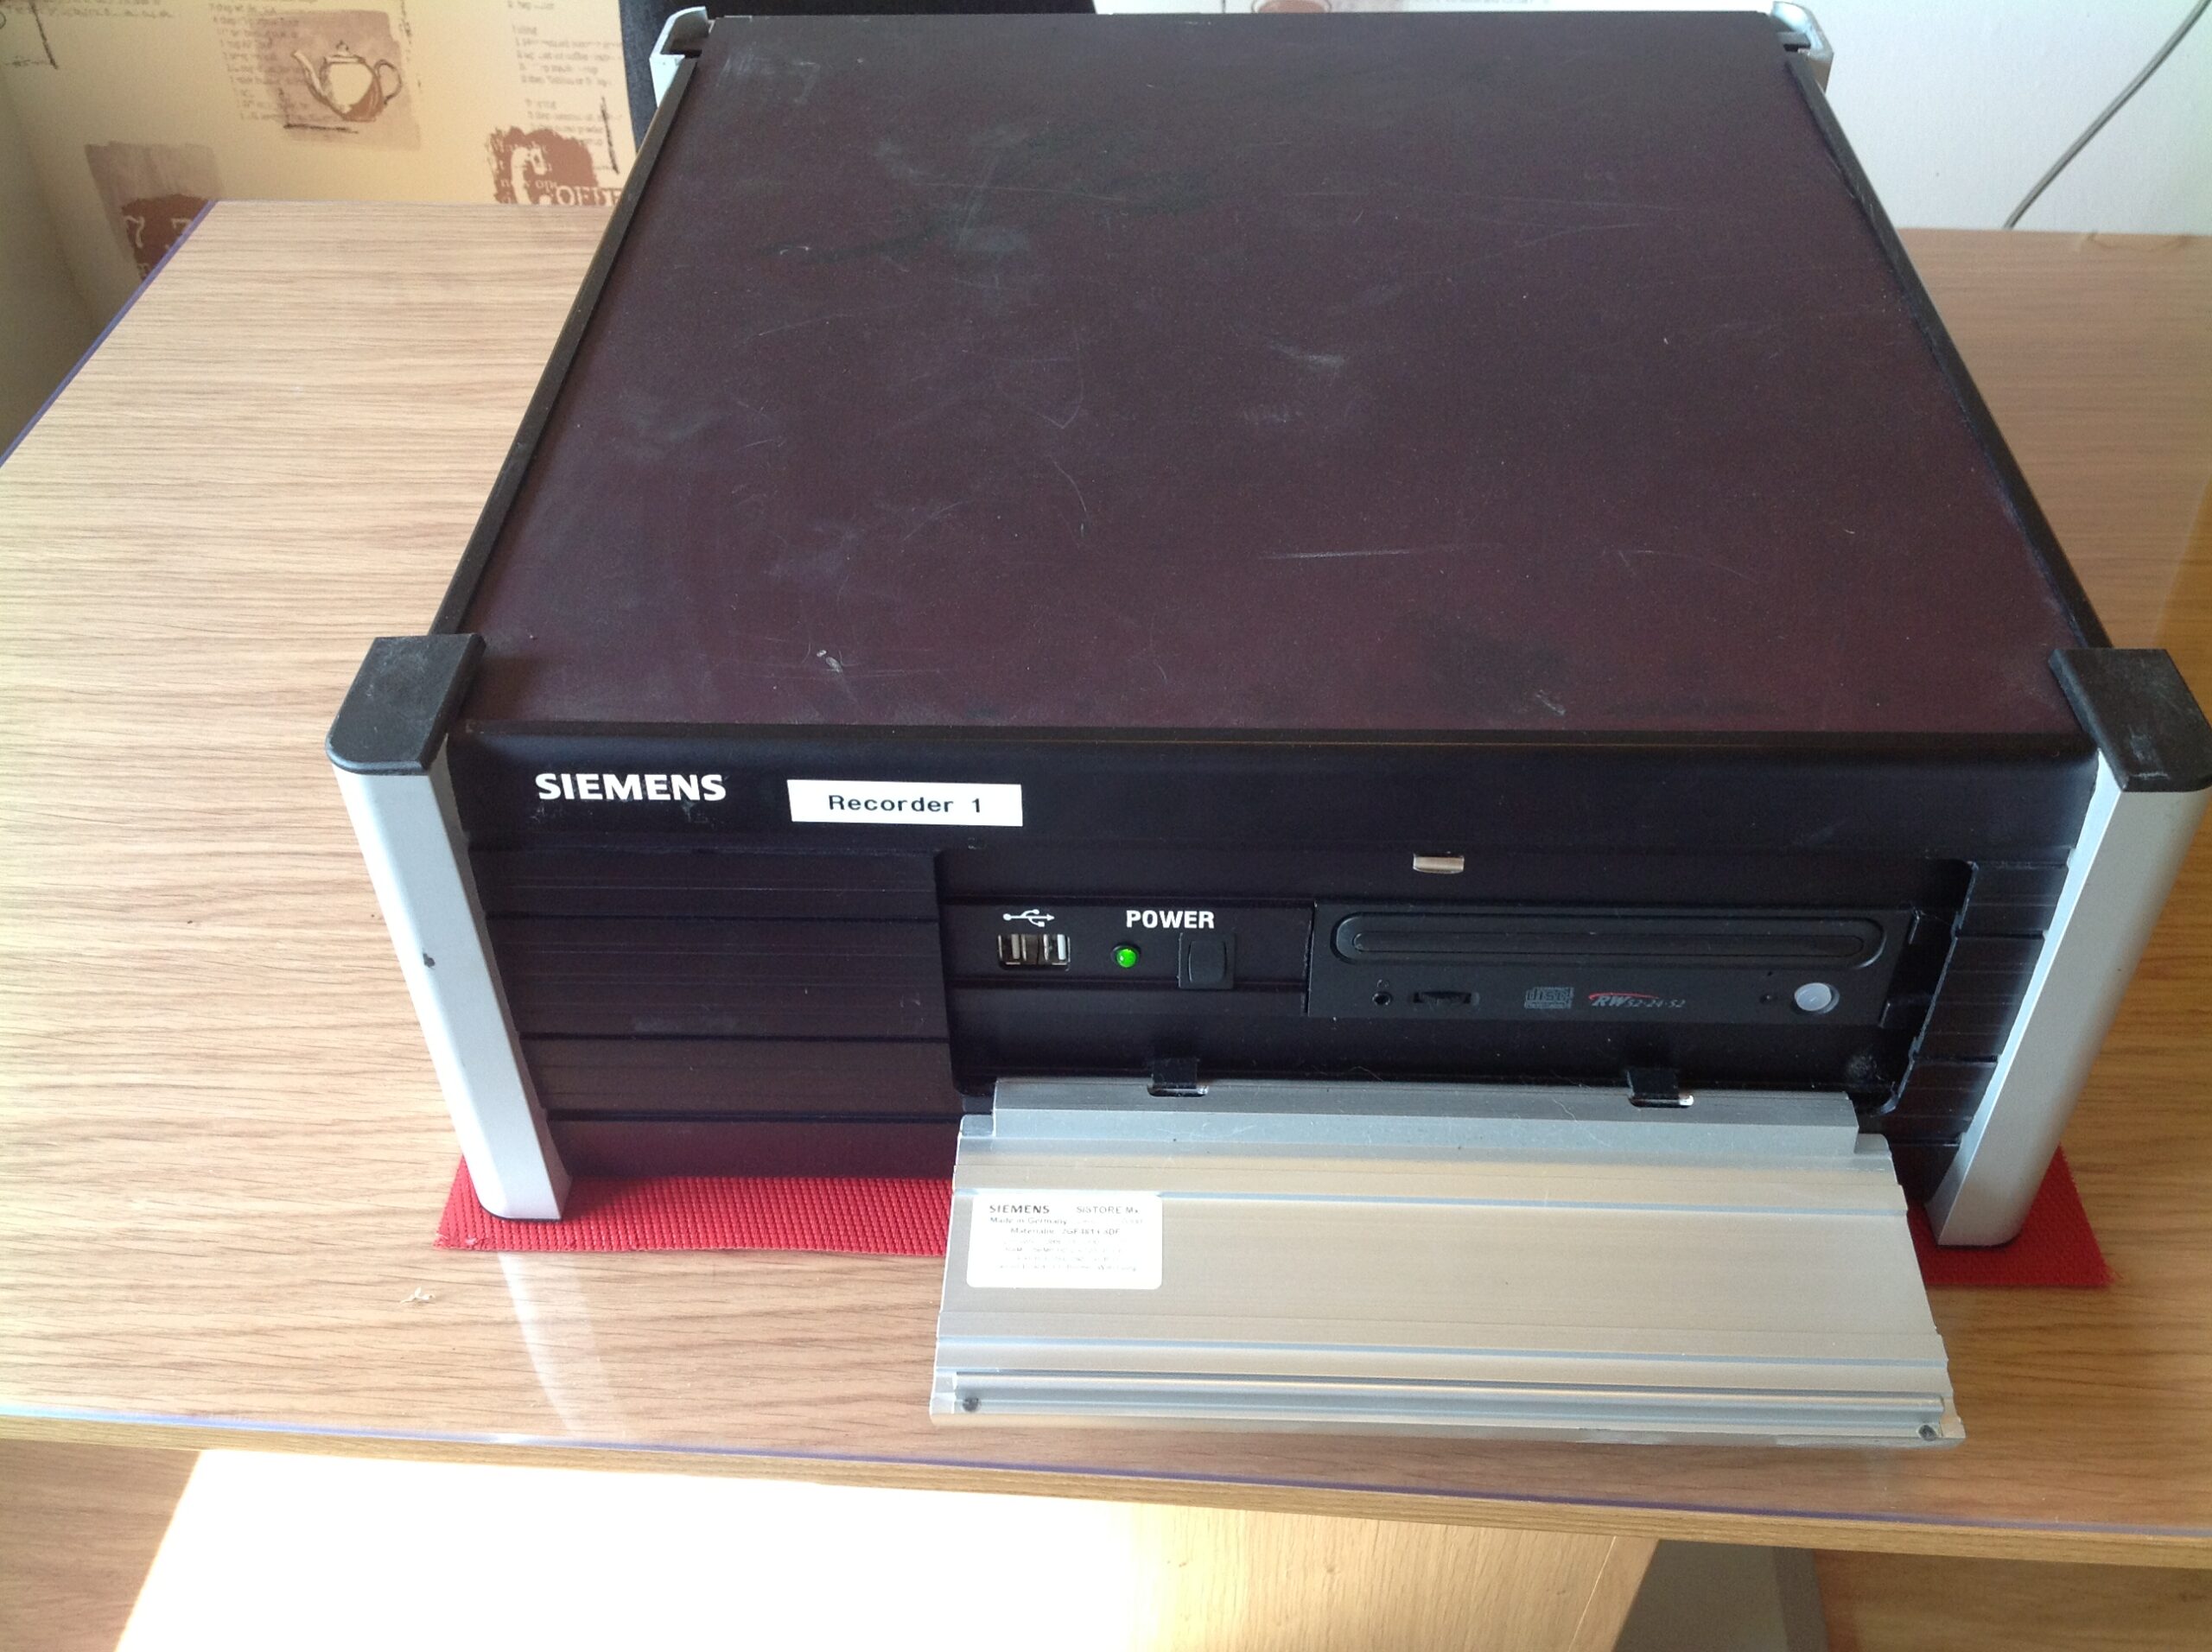 Siemens Digital Video Recorder Sistore MX Pro 16, 2GF4813-8DF